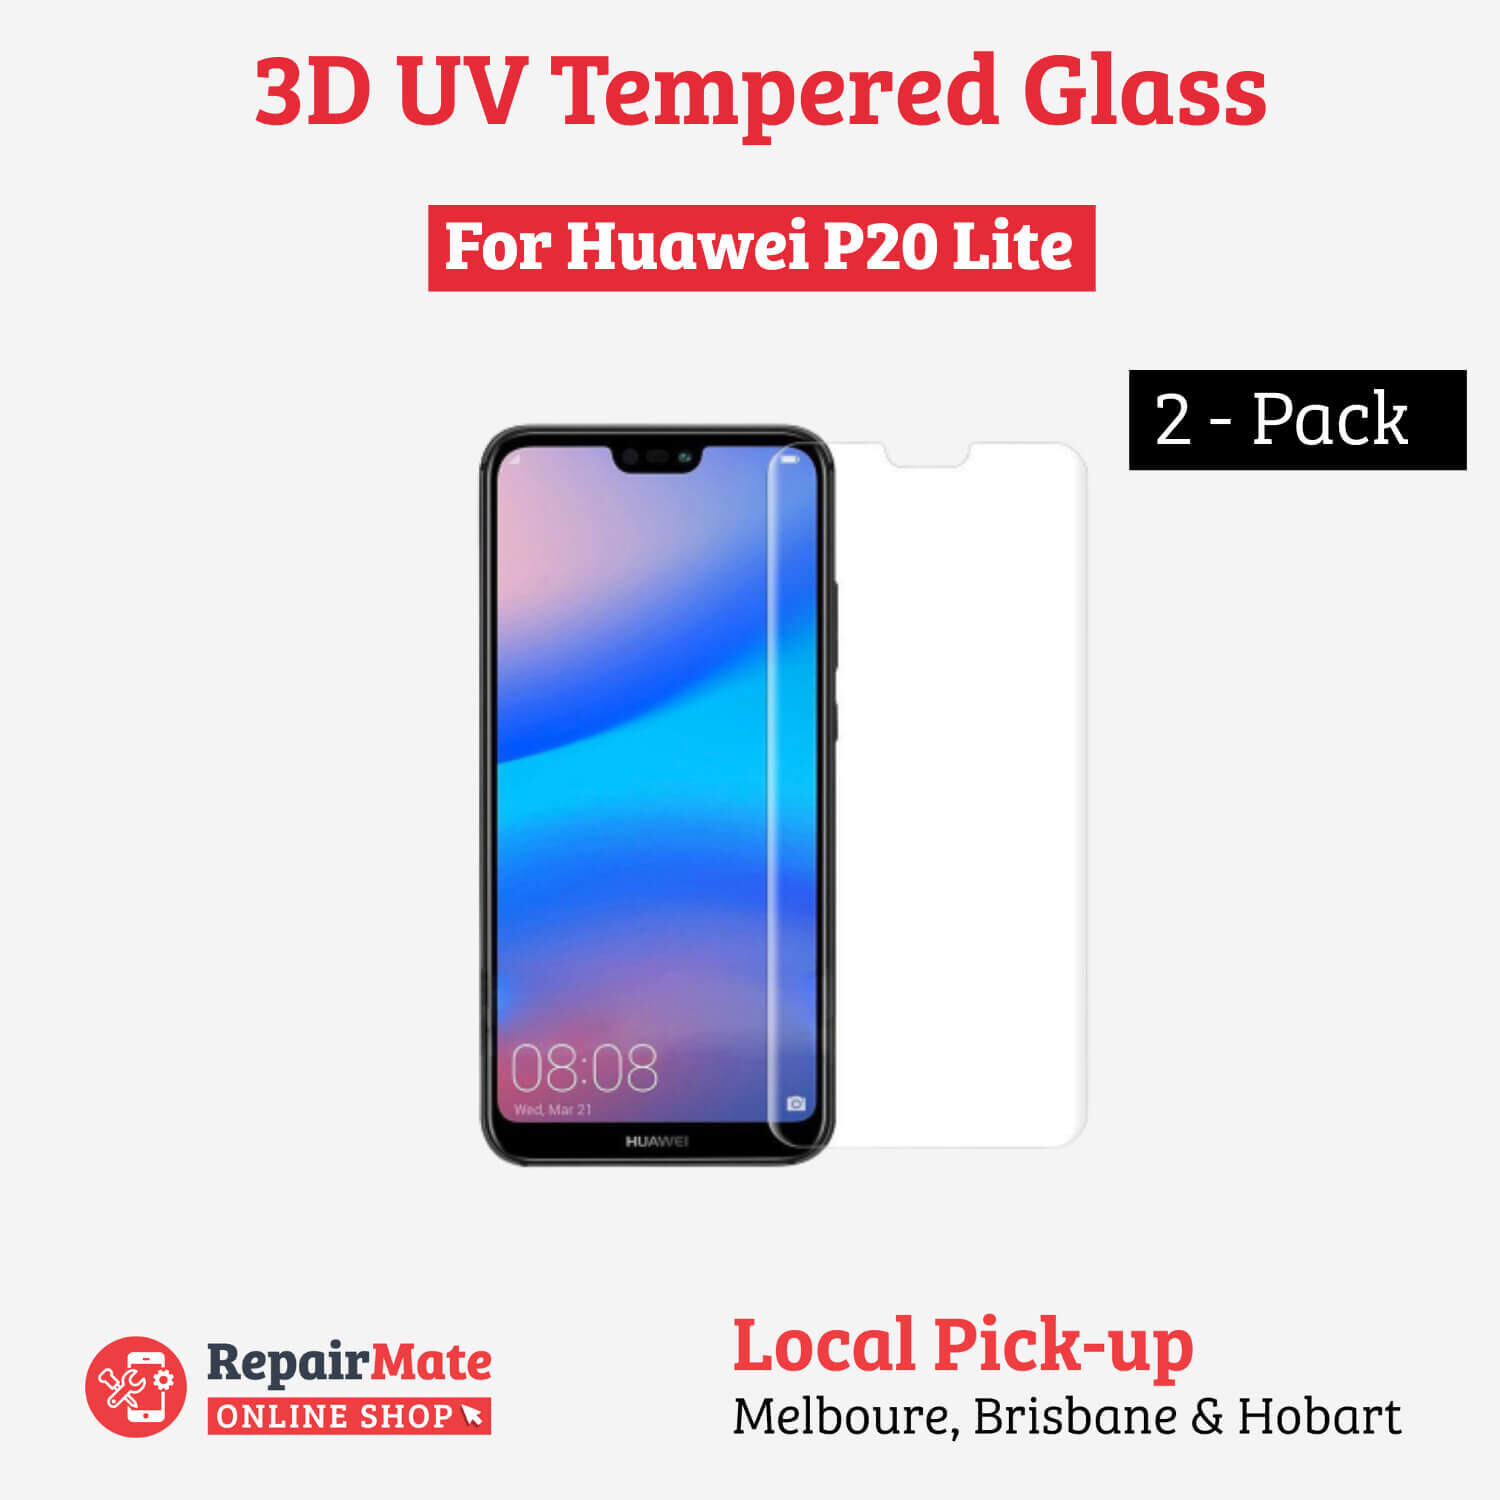 Huawei P20 Lite 3D UV Tempered Glass